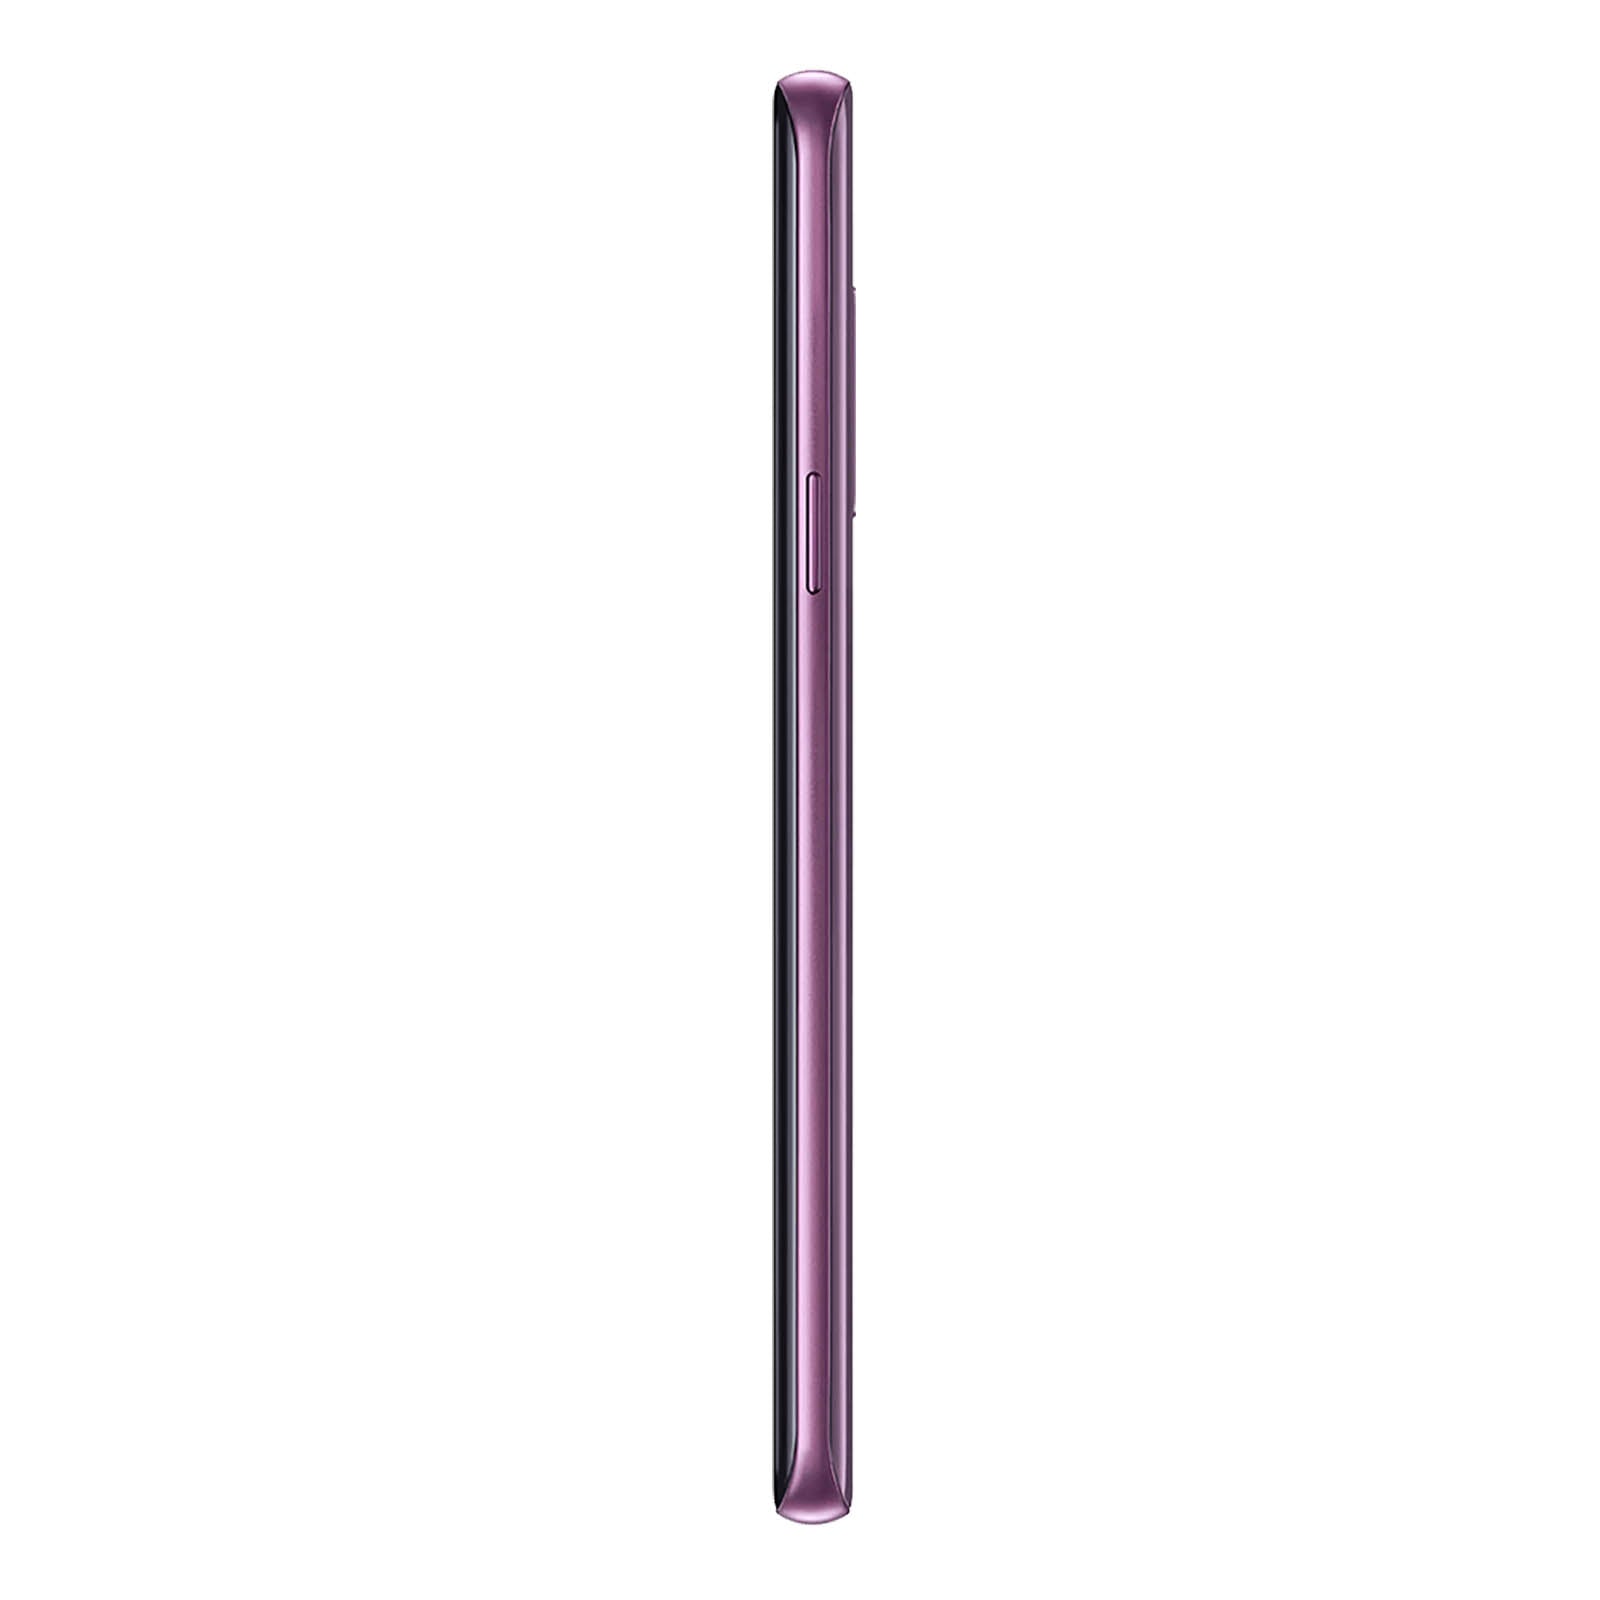 Samsung Galaxy S9 256GB Purple Pristine - Unlocked